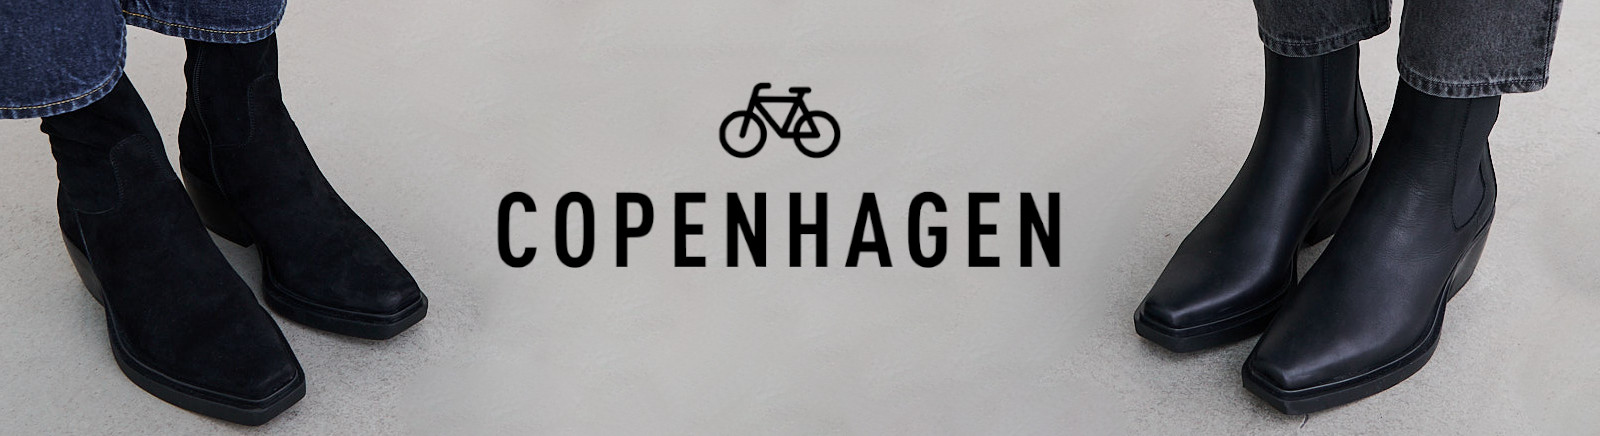 Copenhagen Herrenschuhe online entdecken im Juppen Schuhe Shop